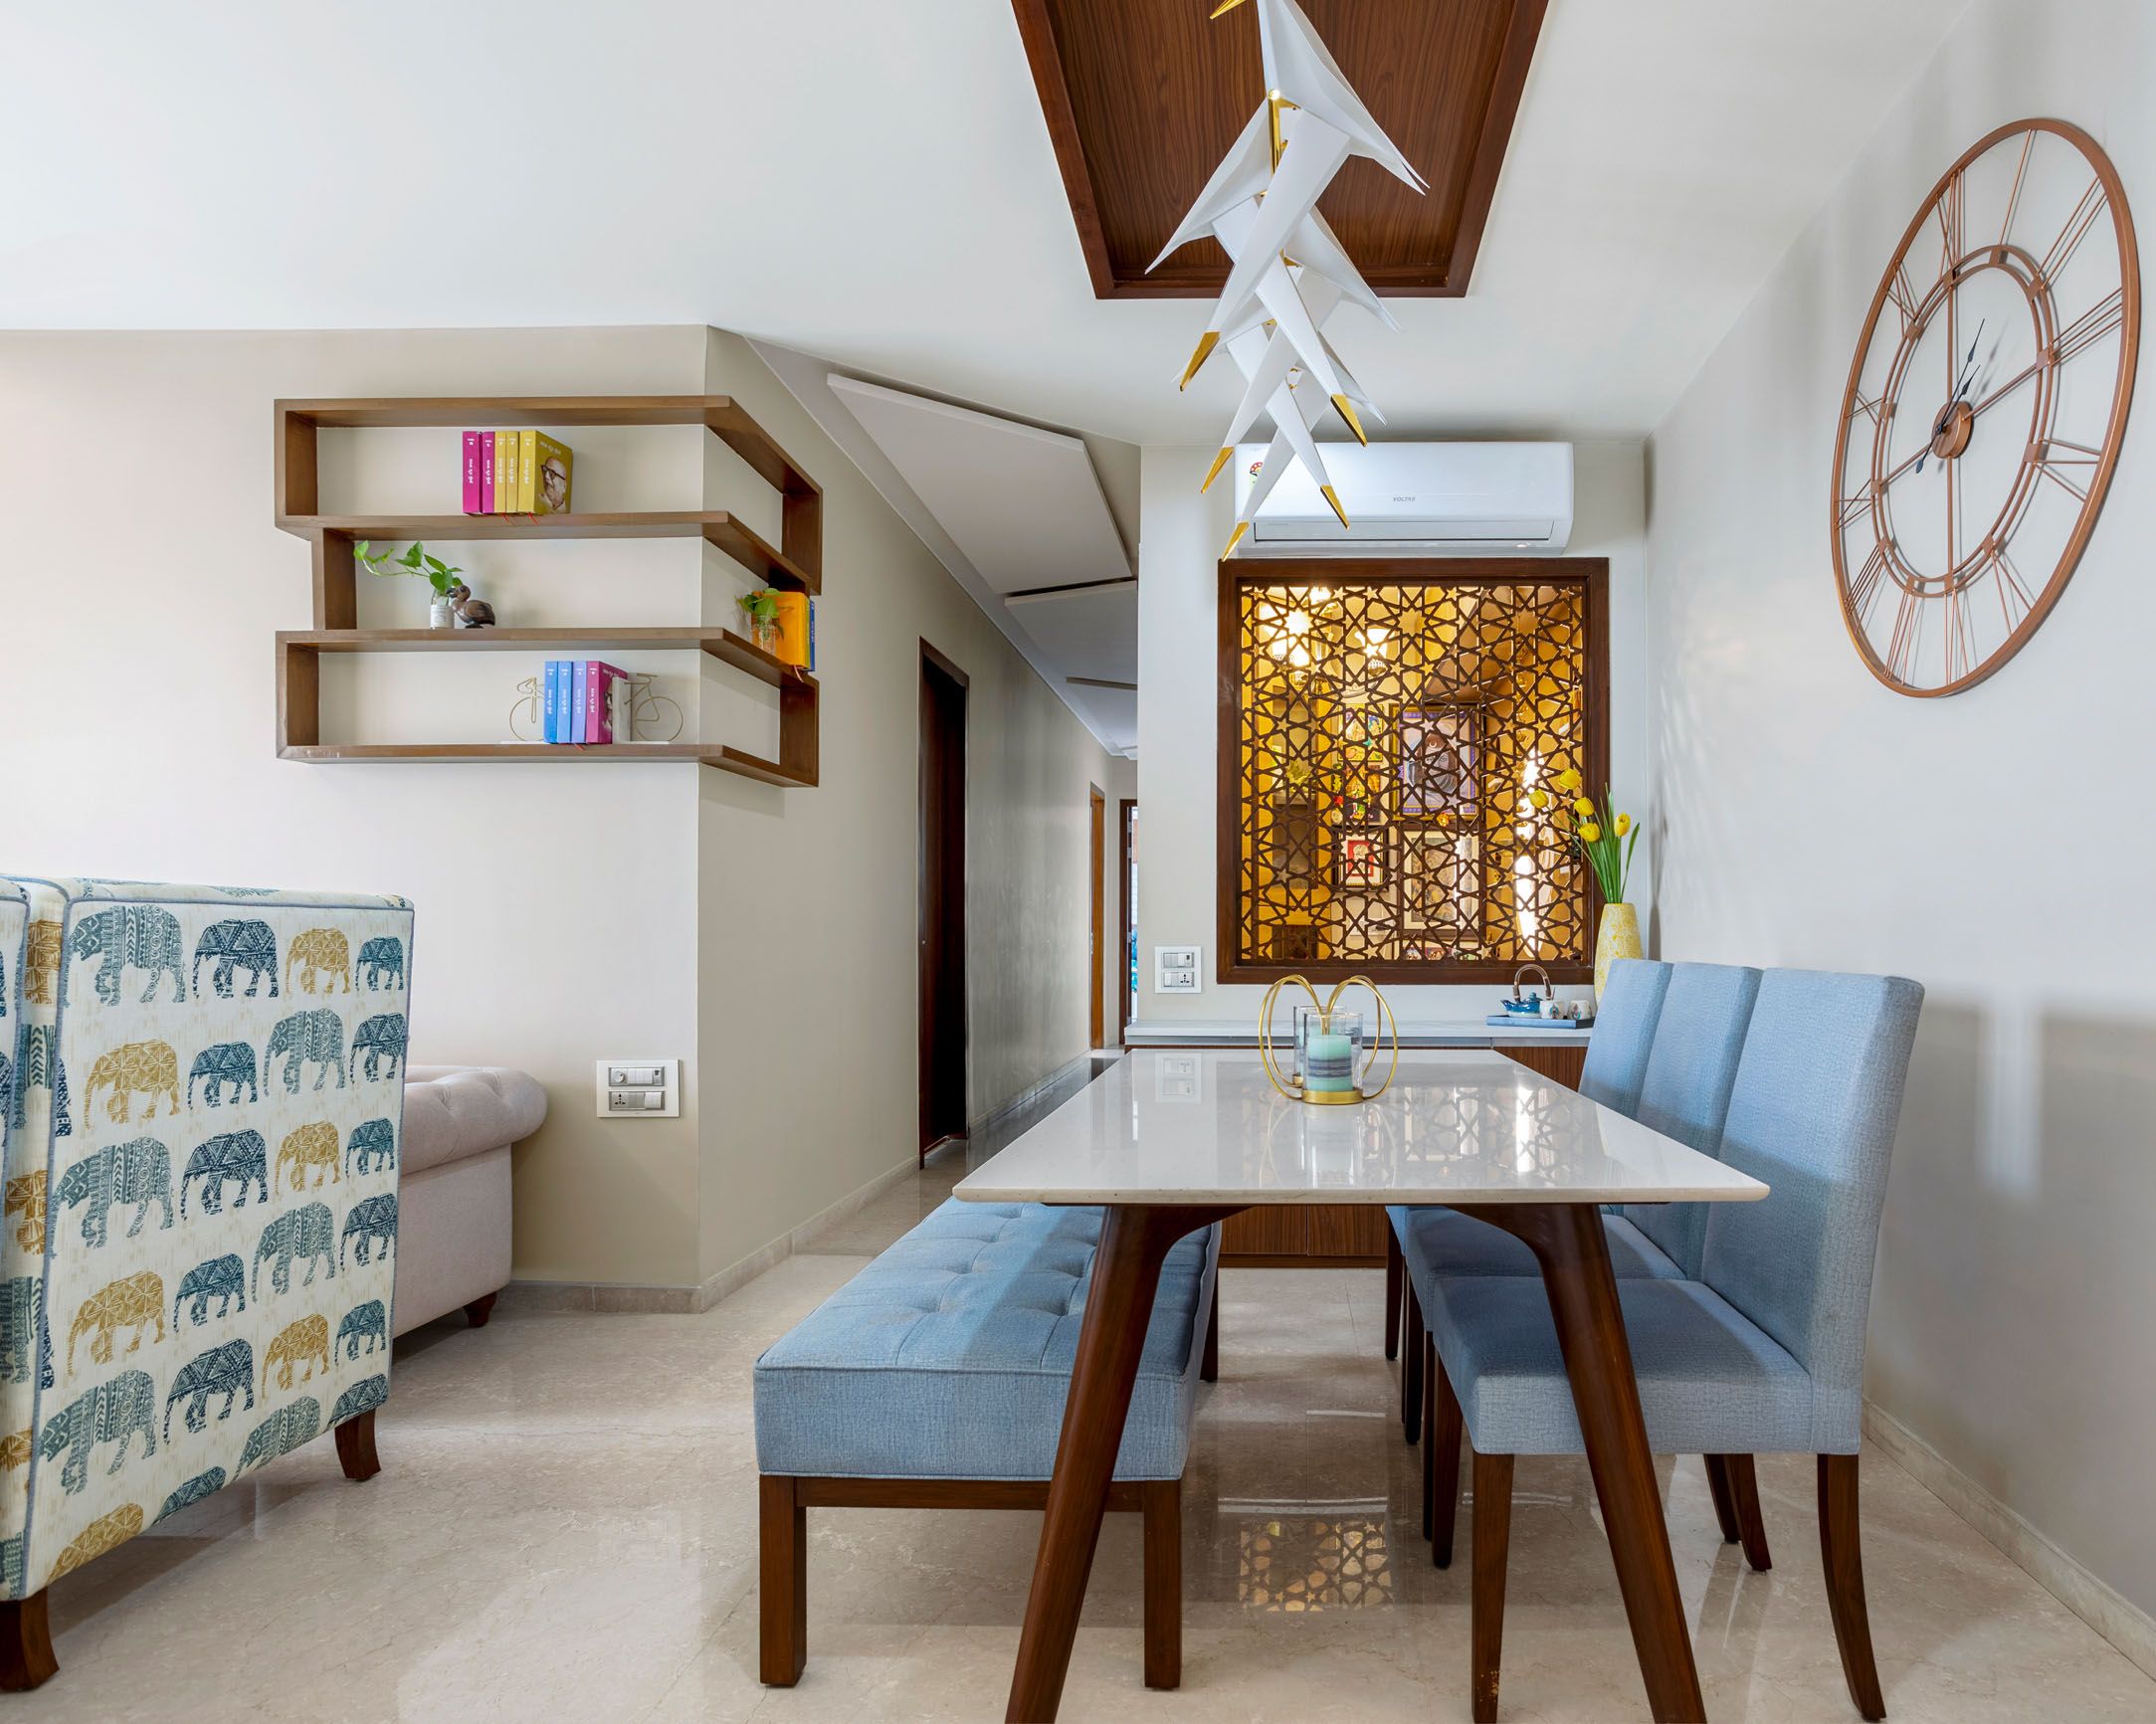 Bohemian 2-BHK Flat Design In Mumbai With All-Wood Pooja Room